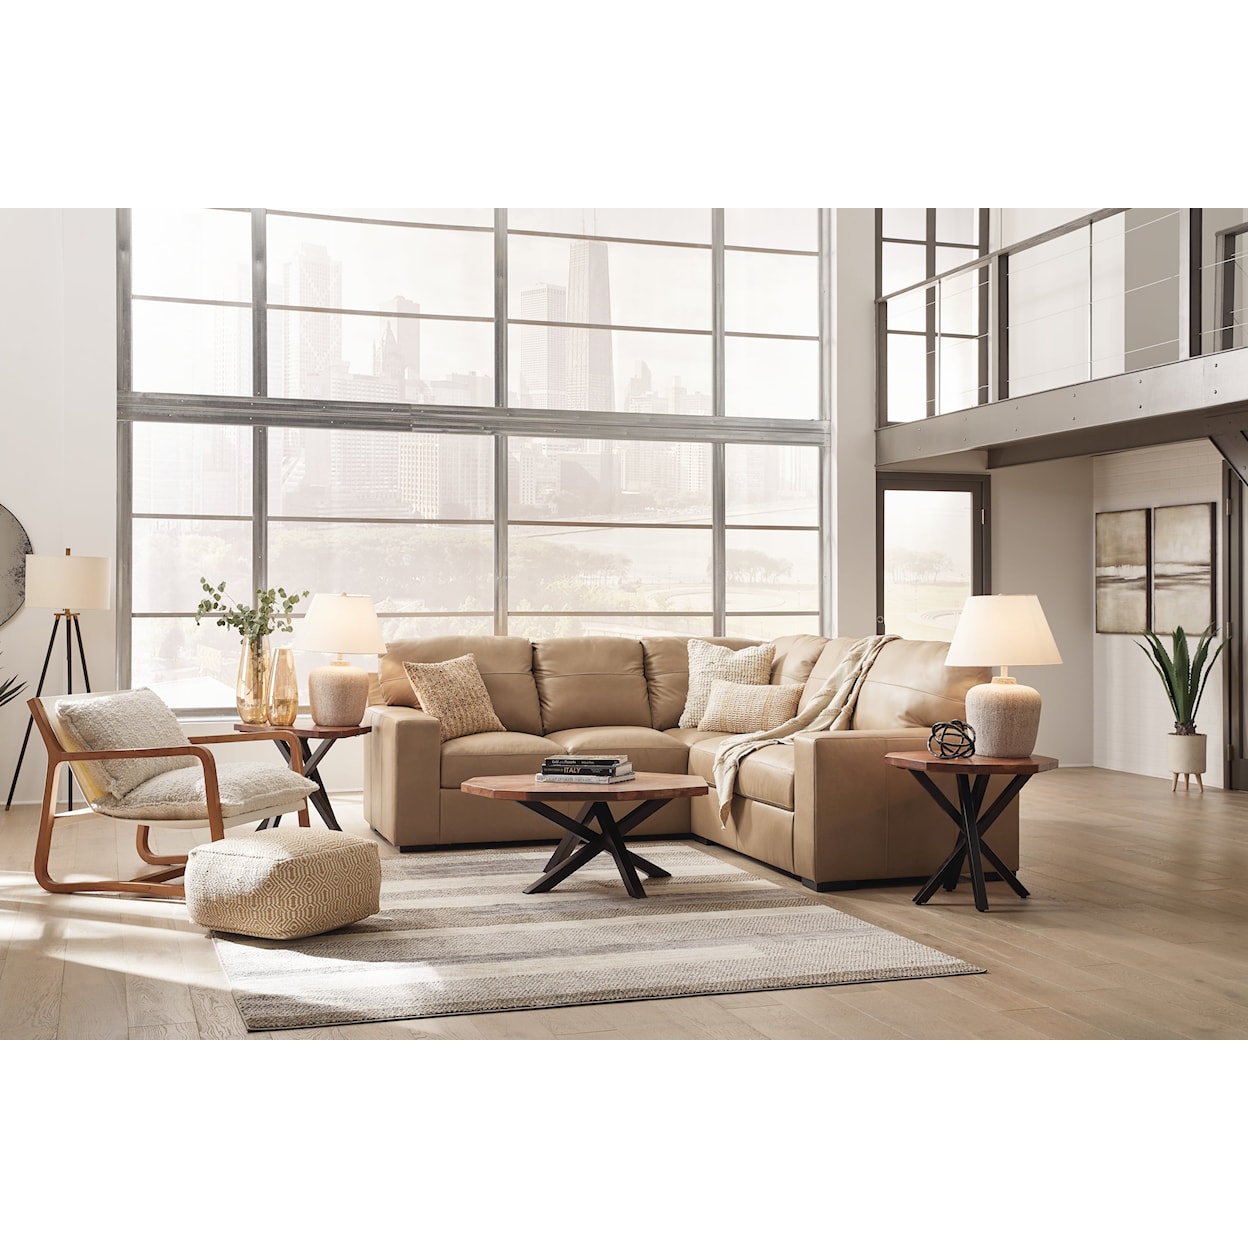 Ashley Furniture Signature Design Bandon 2-Piece Sectional